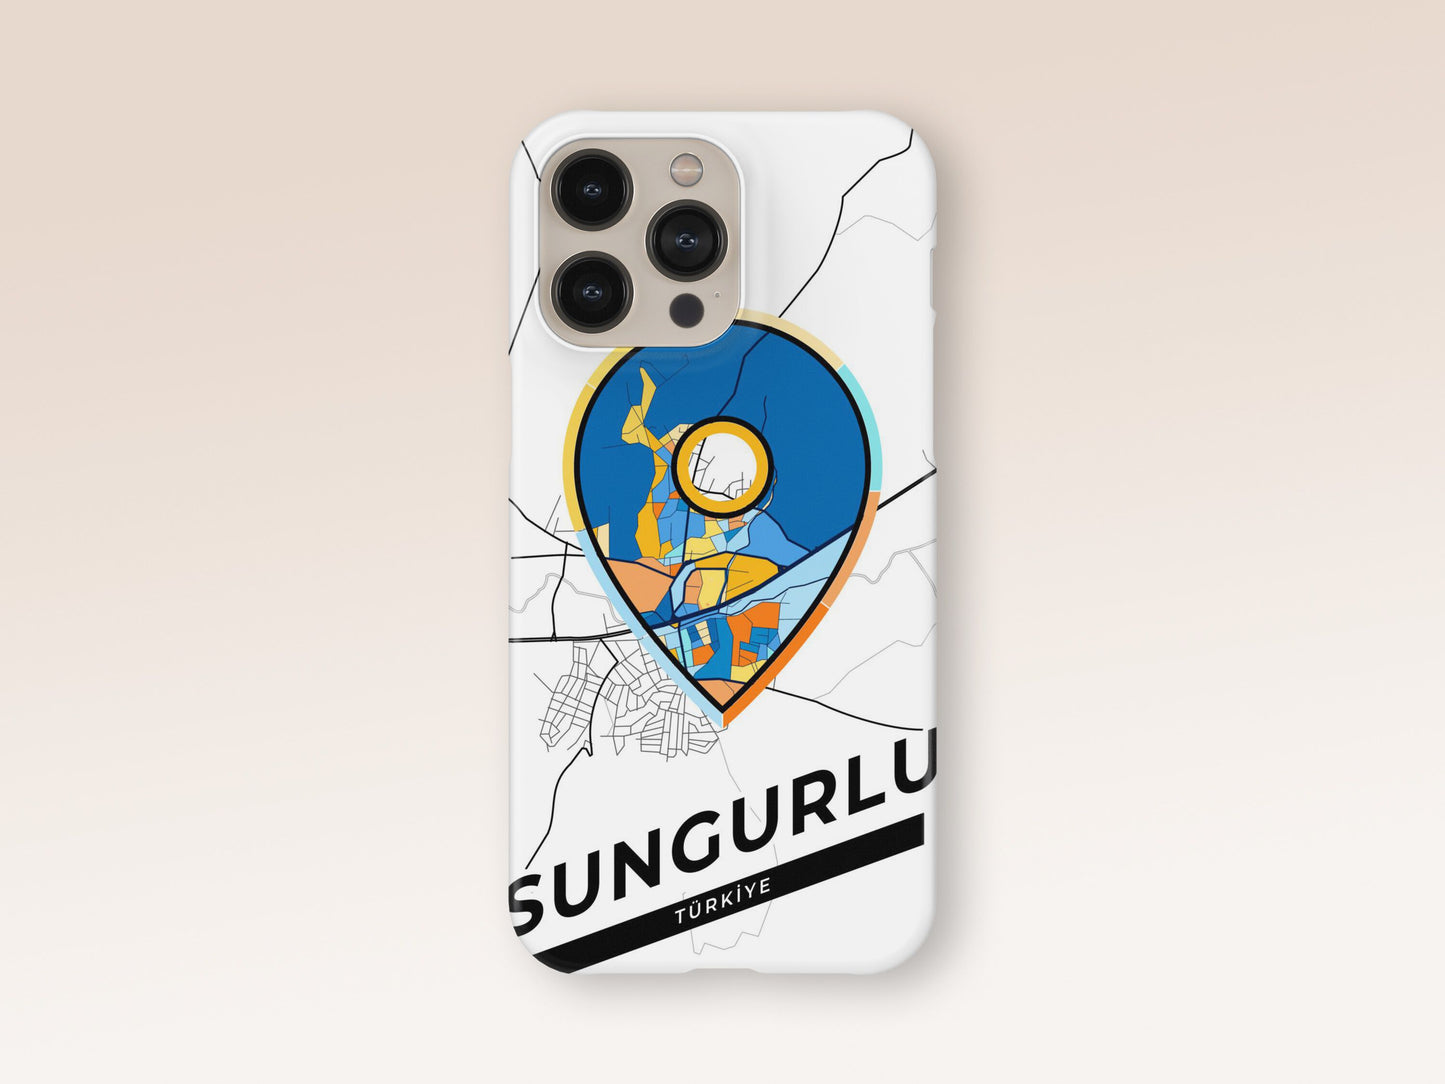 Sungurlu Turkey slim phone case with colorful icon 1